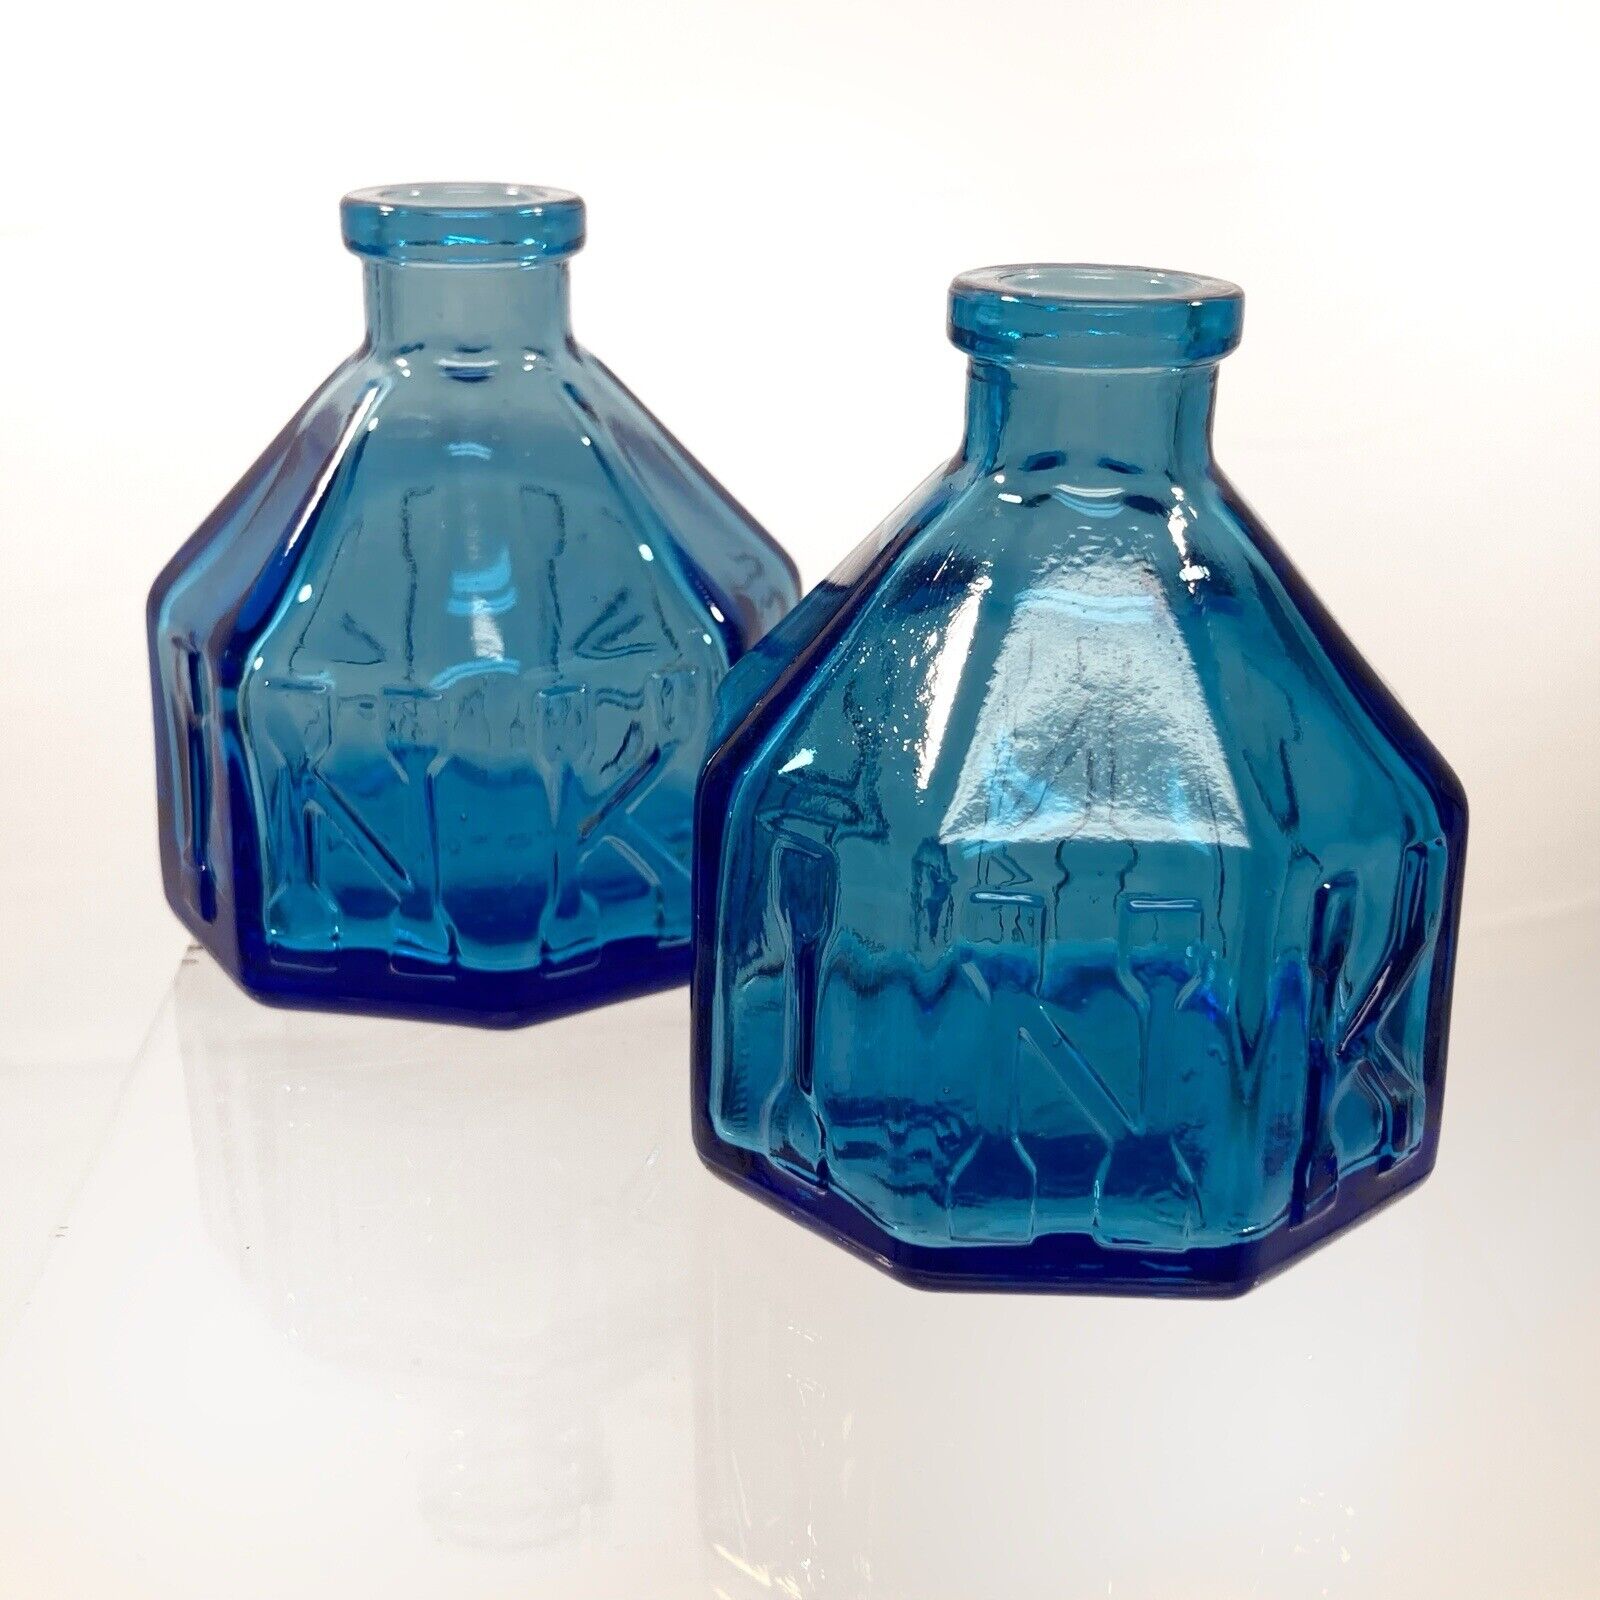 2 Vintage Wheaton New Jersey Blue Glass 2.5